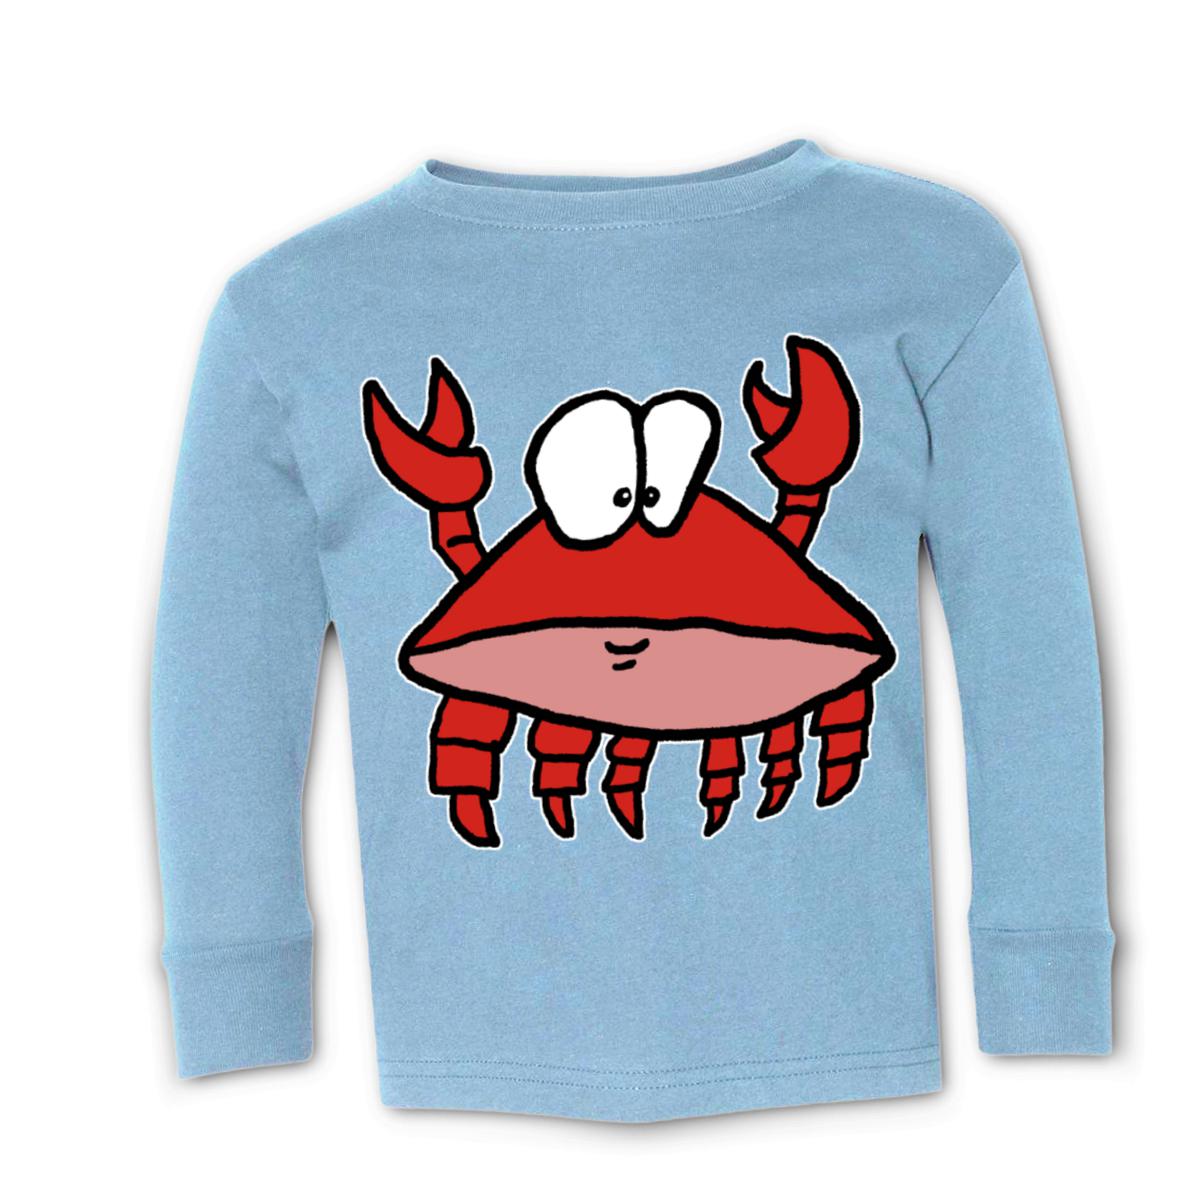 Crab 2.0 Toddler Long Sleeve Tee 56T light-blue